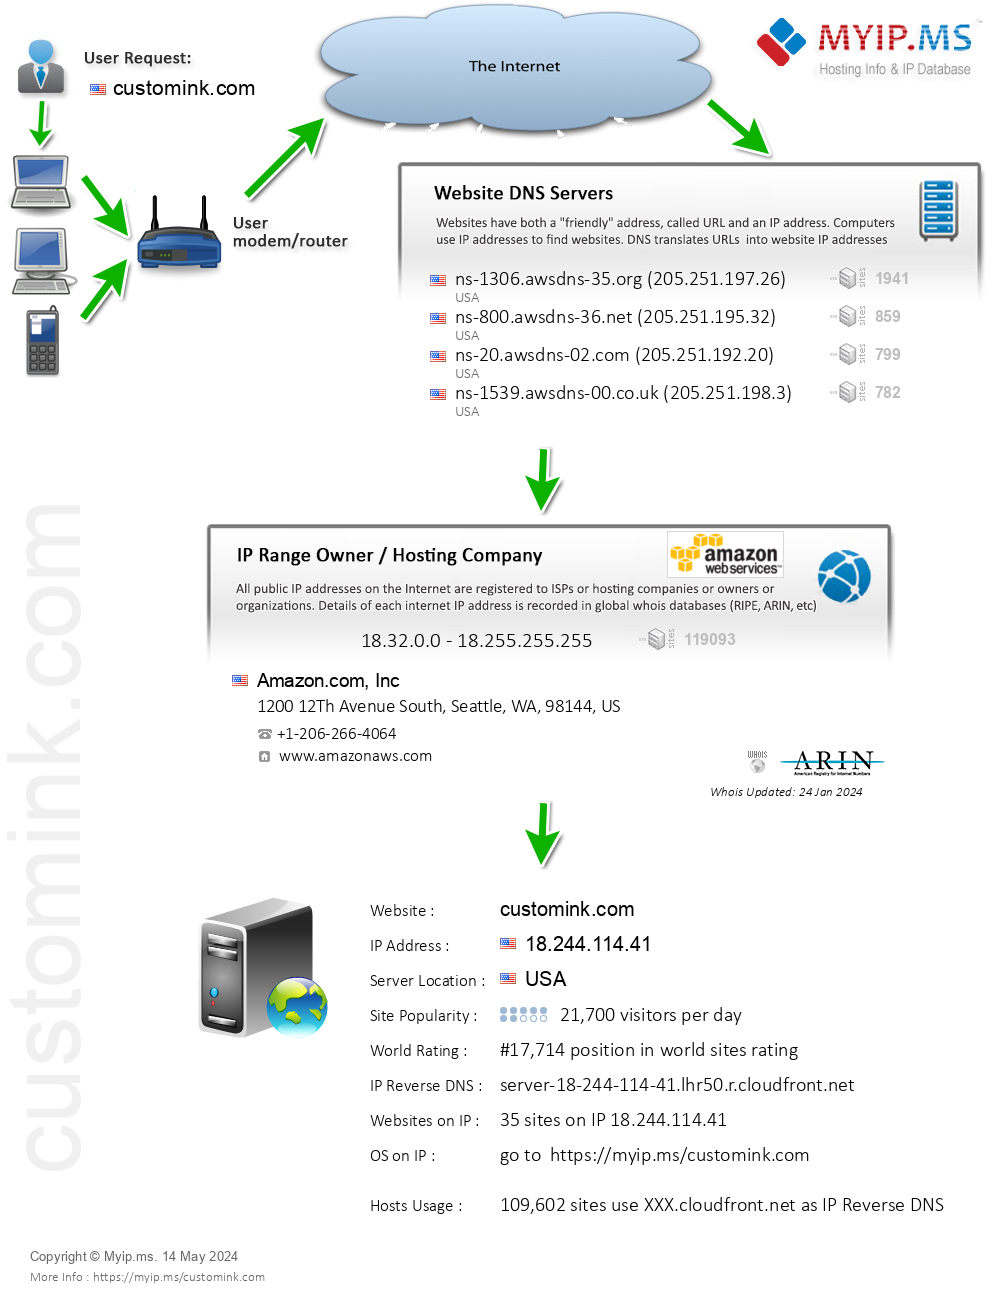 Customink.com - Website Hosting Visual IP Diagram